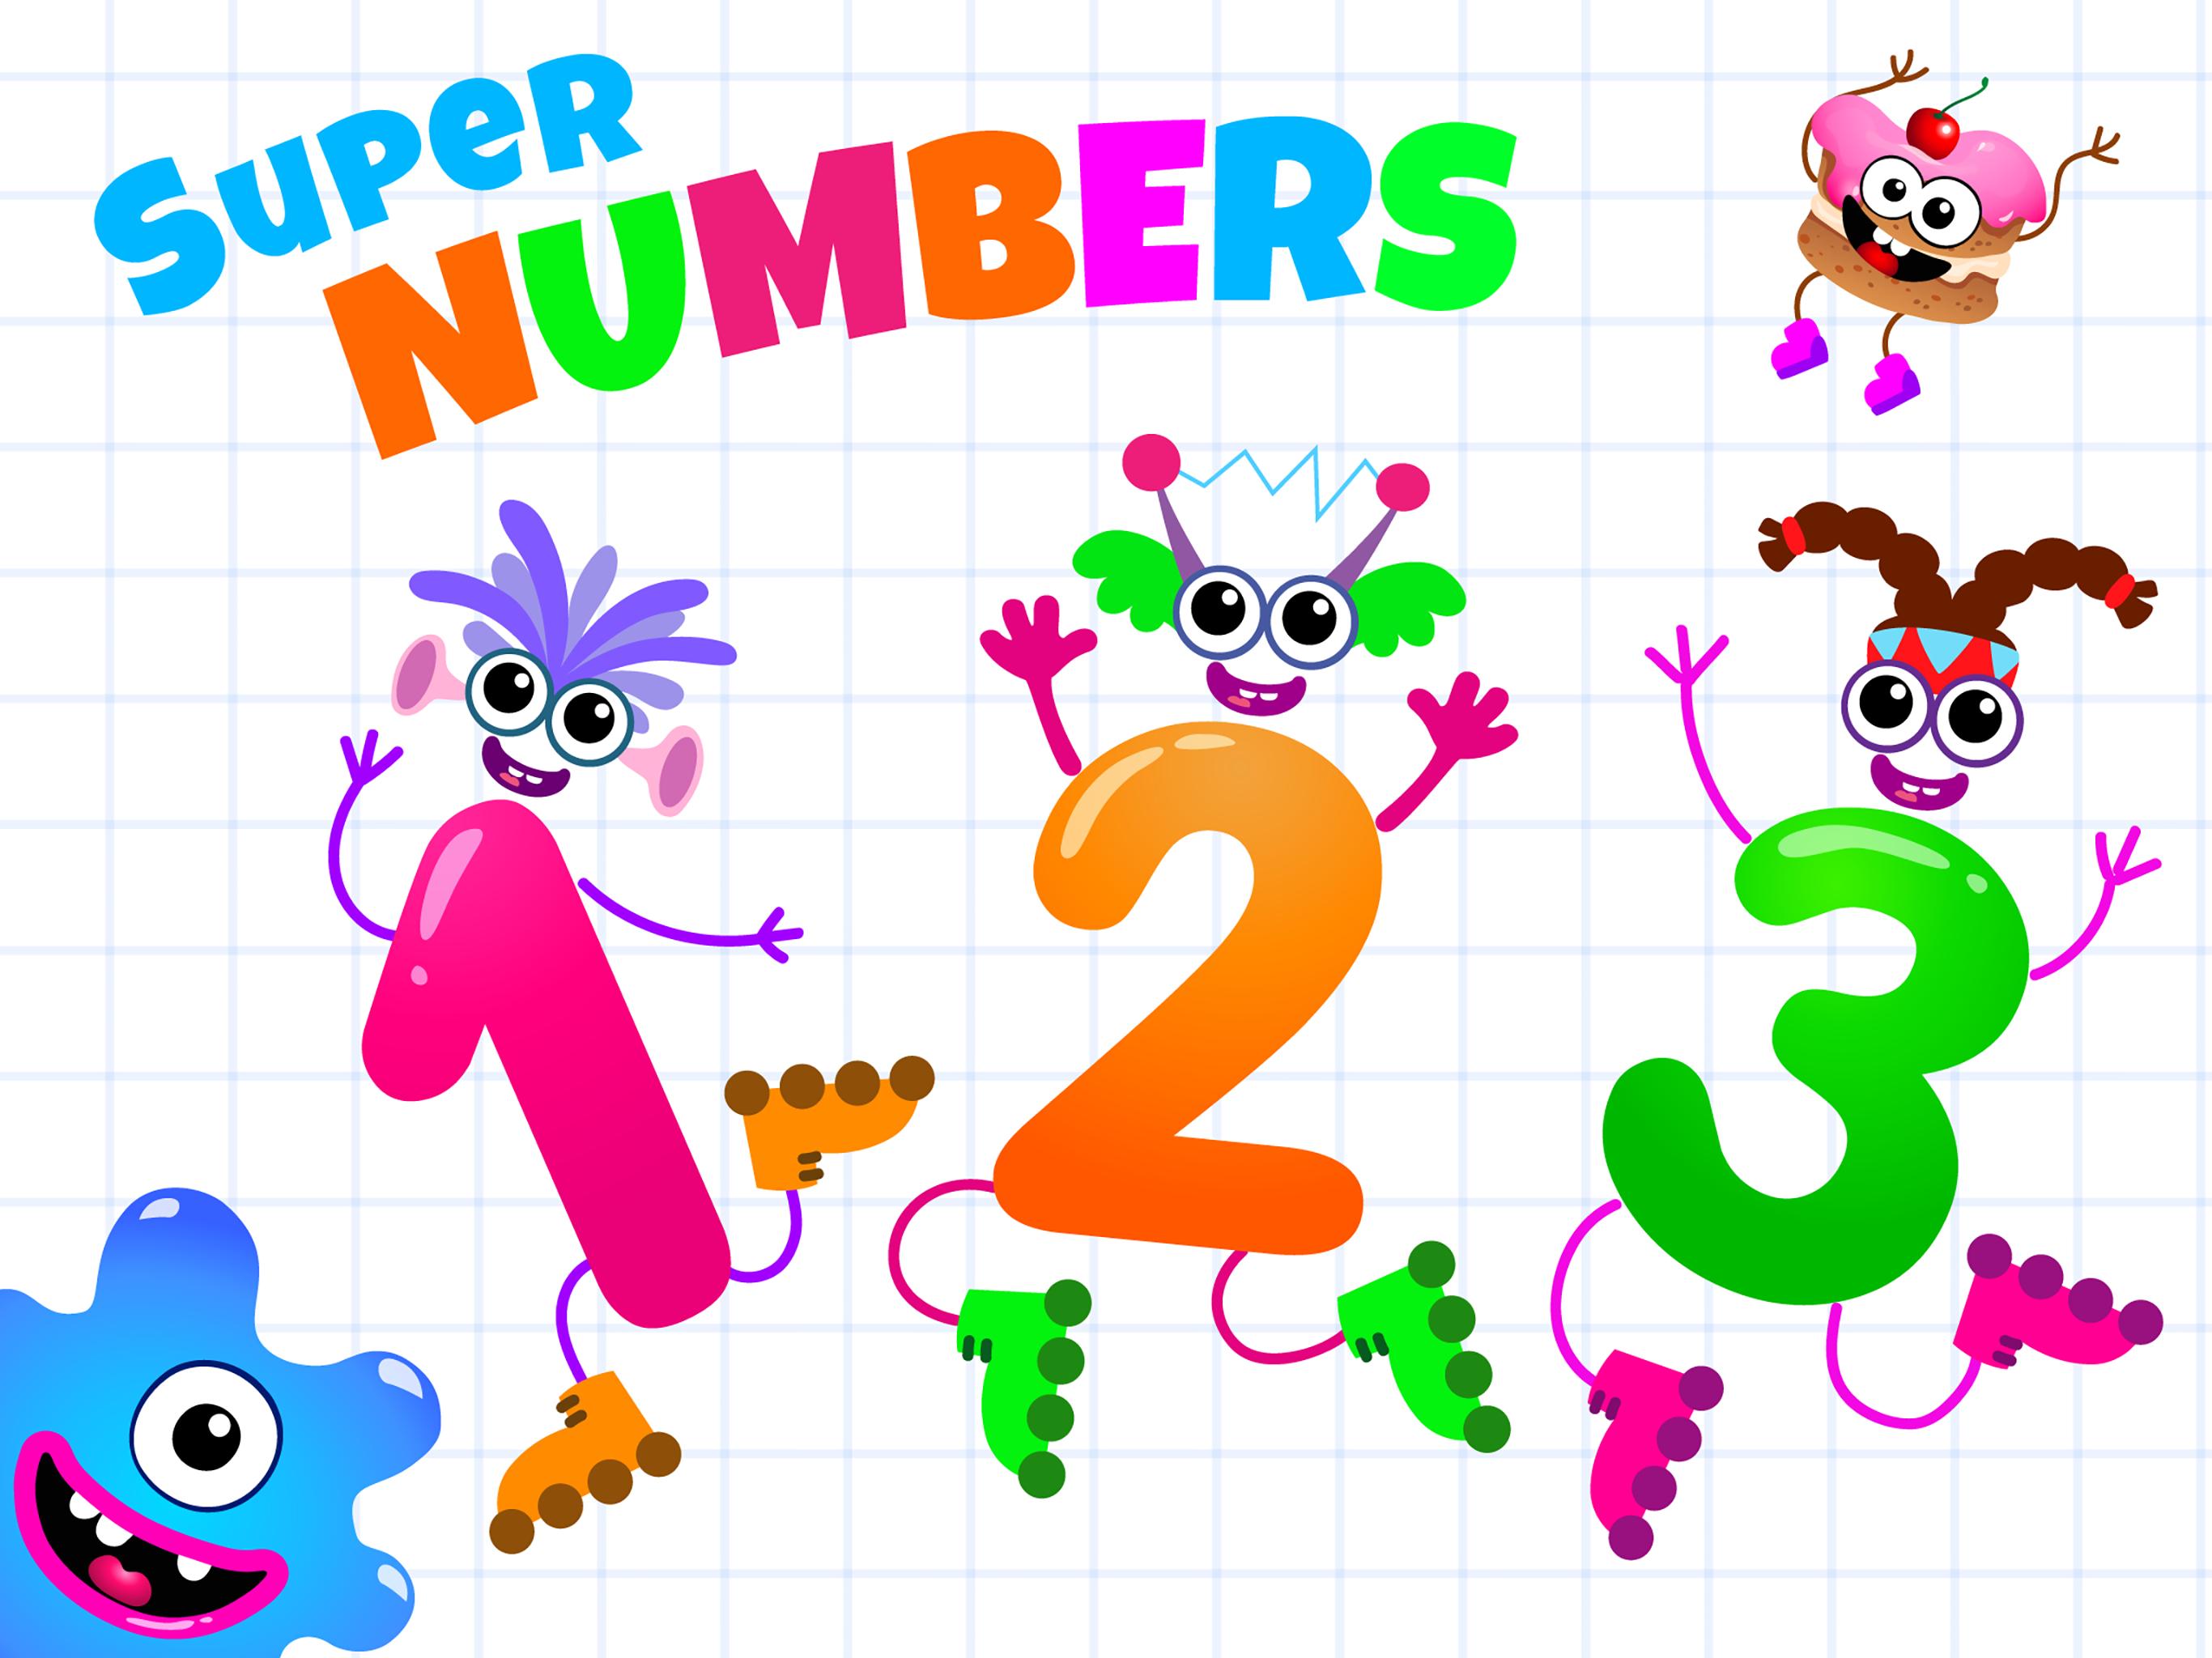 Циферки 19 играть. Цифры для детей. Учим цифры для детей. Циферки для детей. Игра супер цифры.